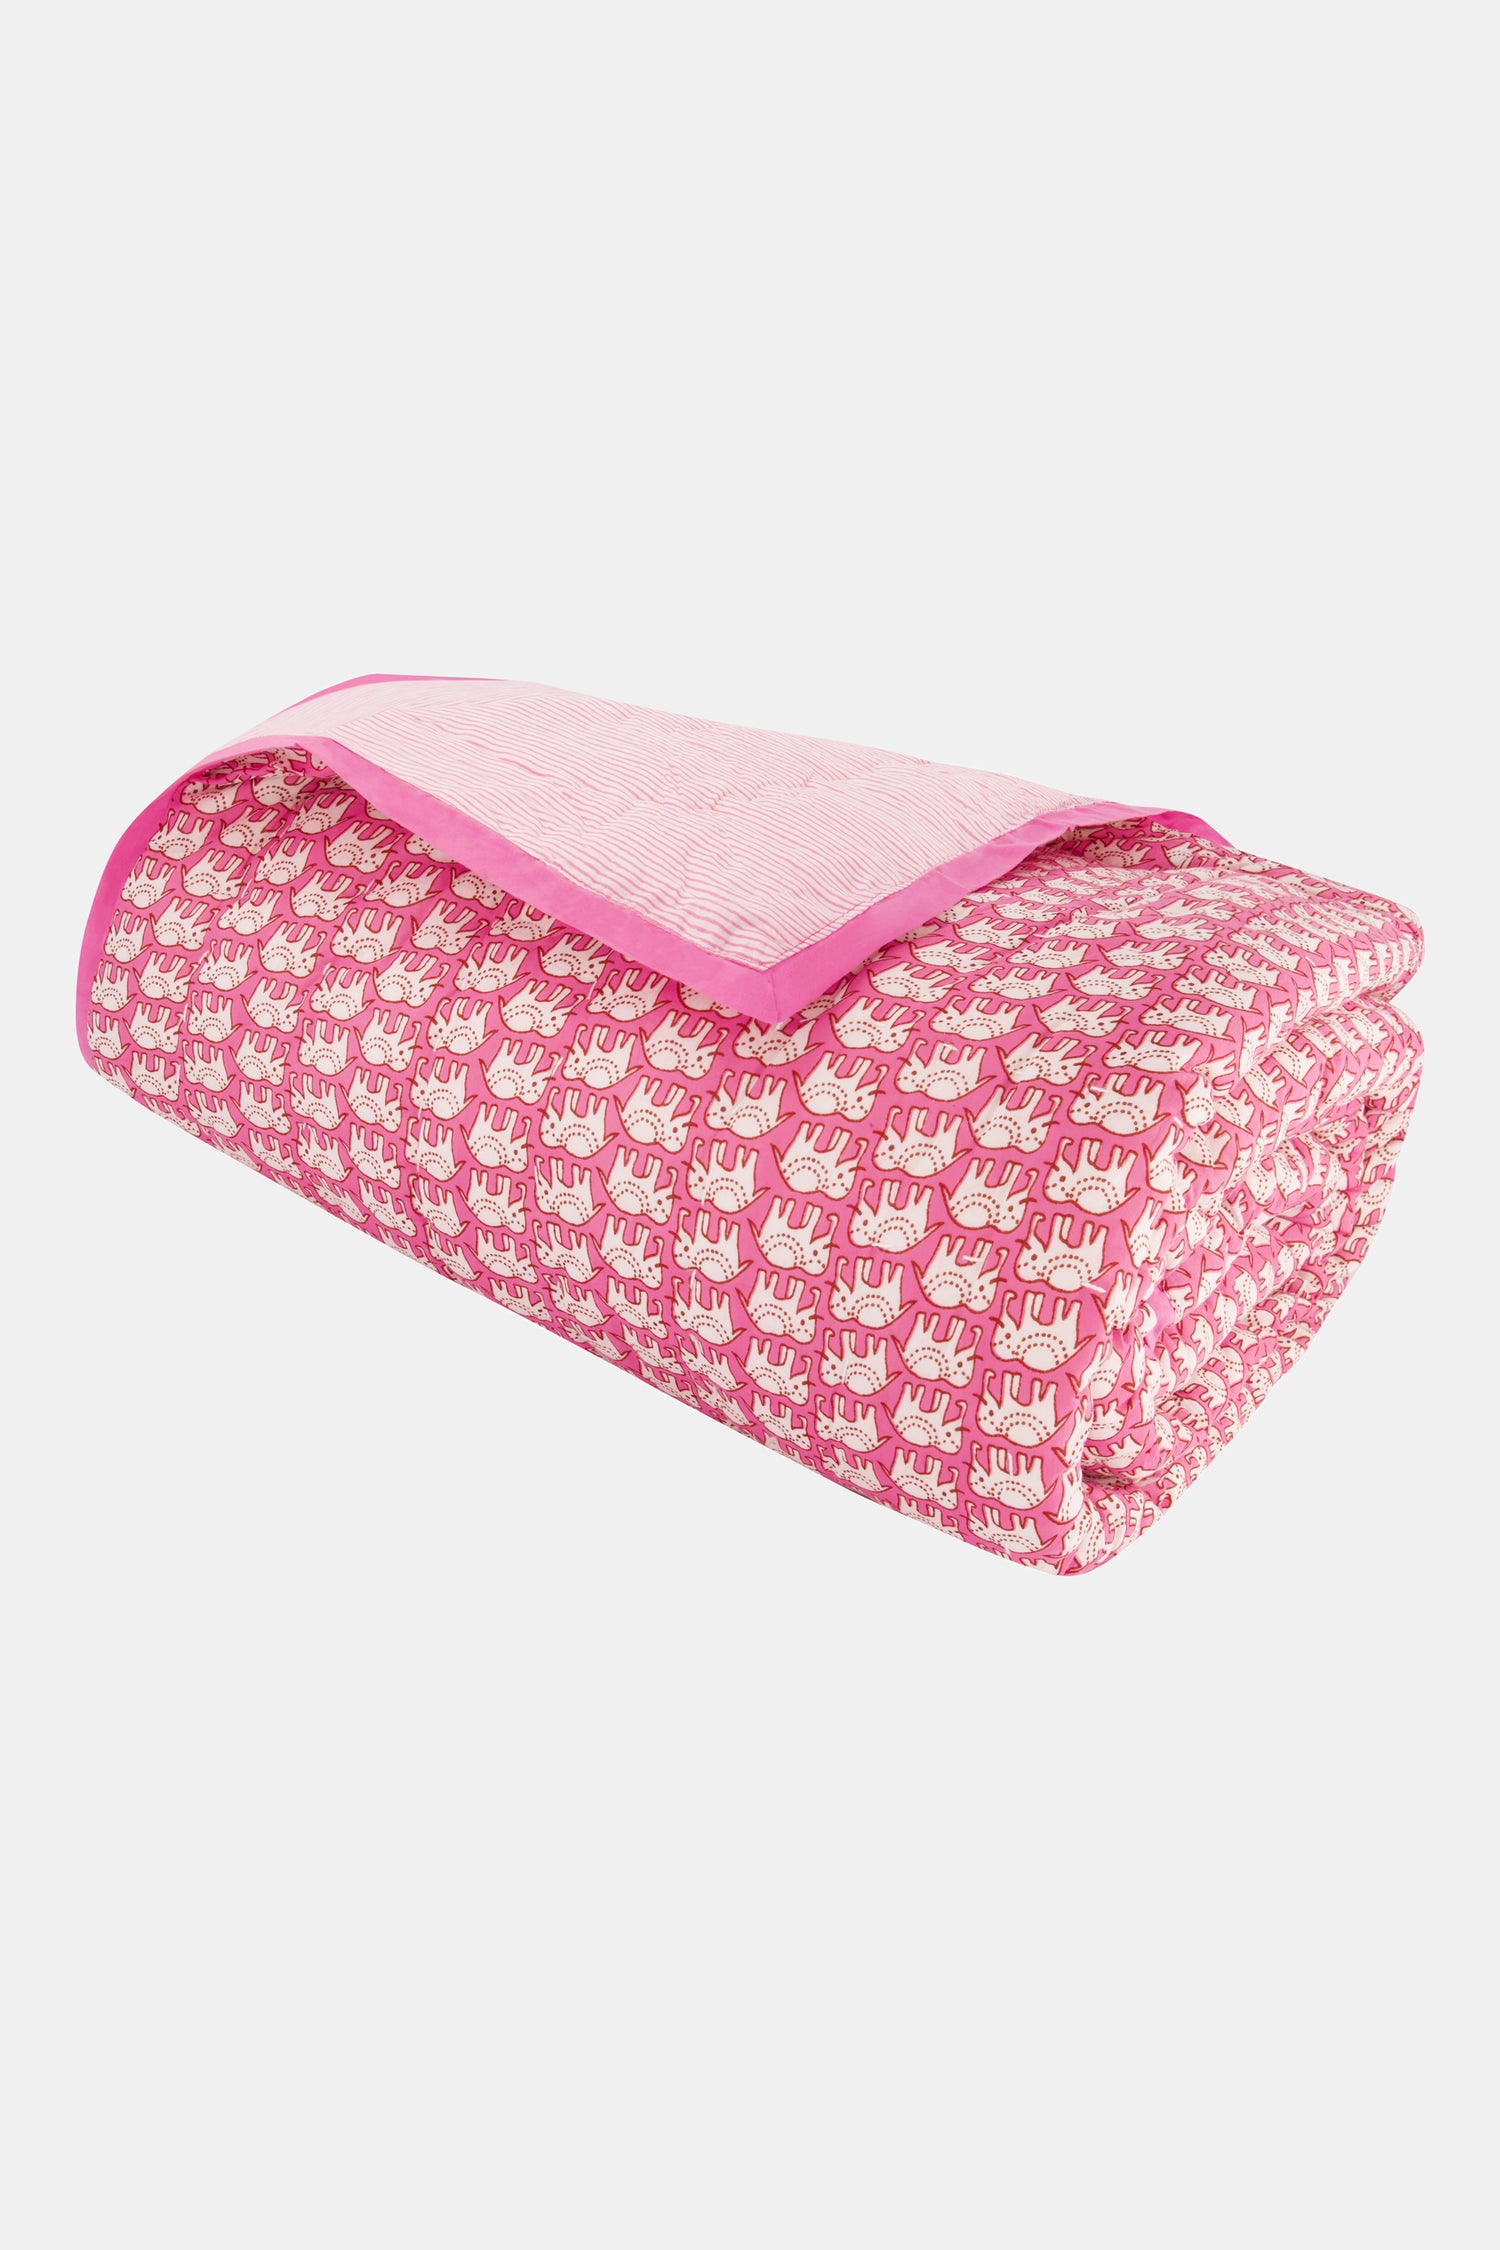 Roller Rabbit Pink Hathi Quilt